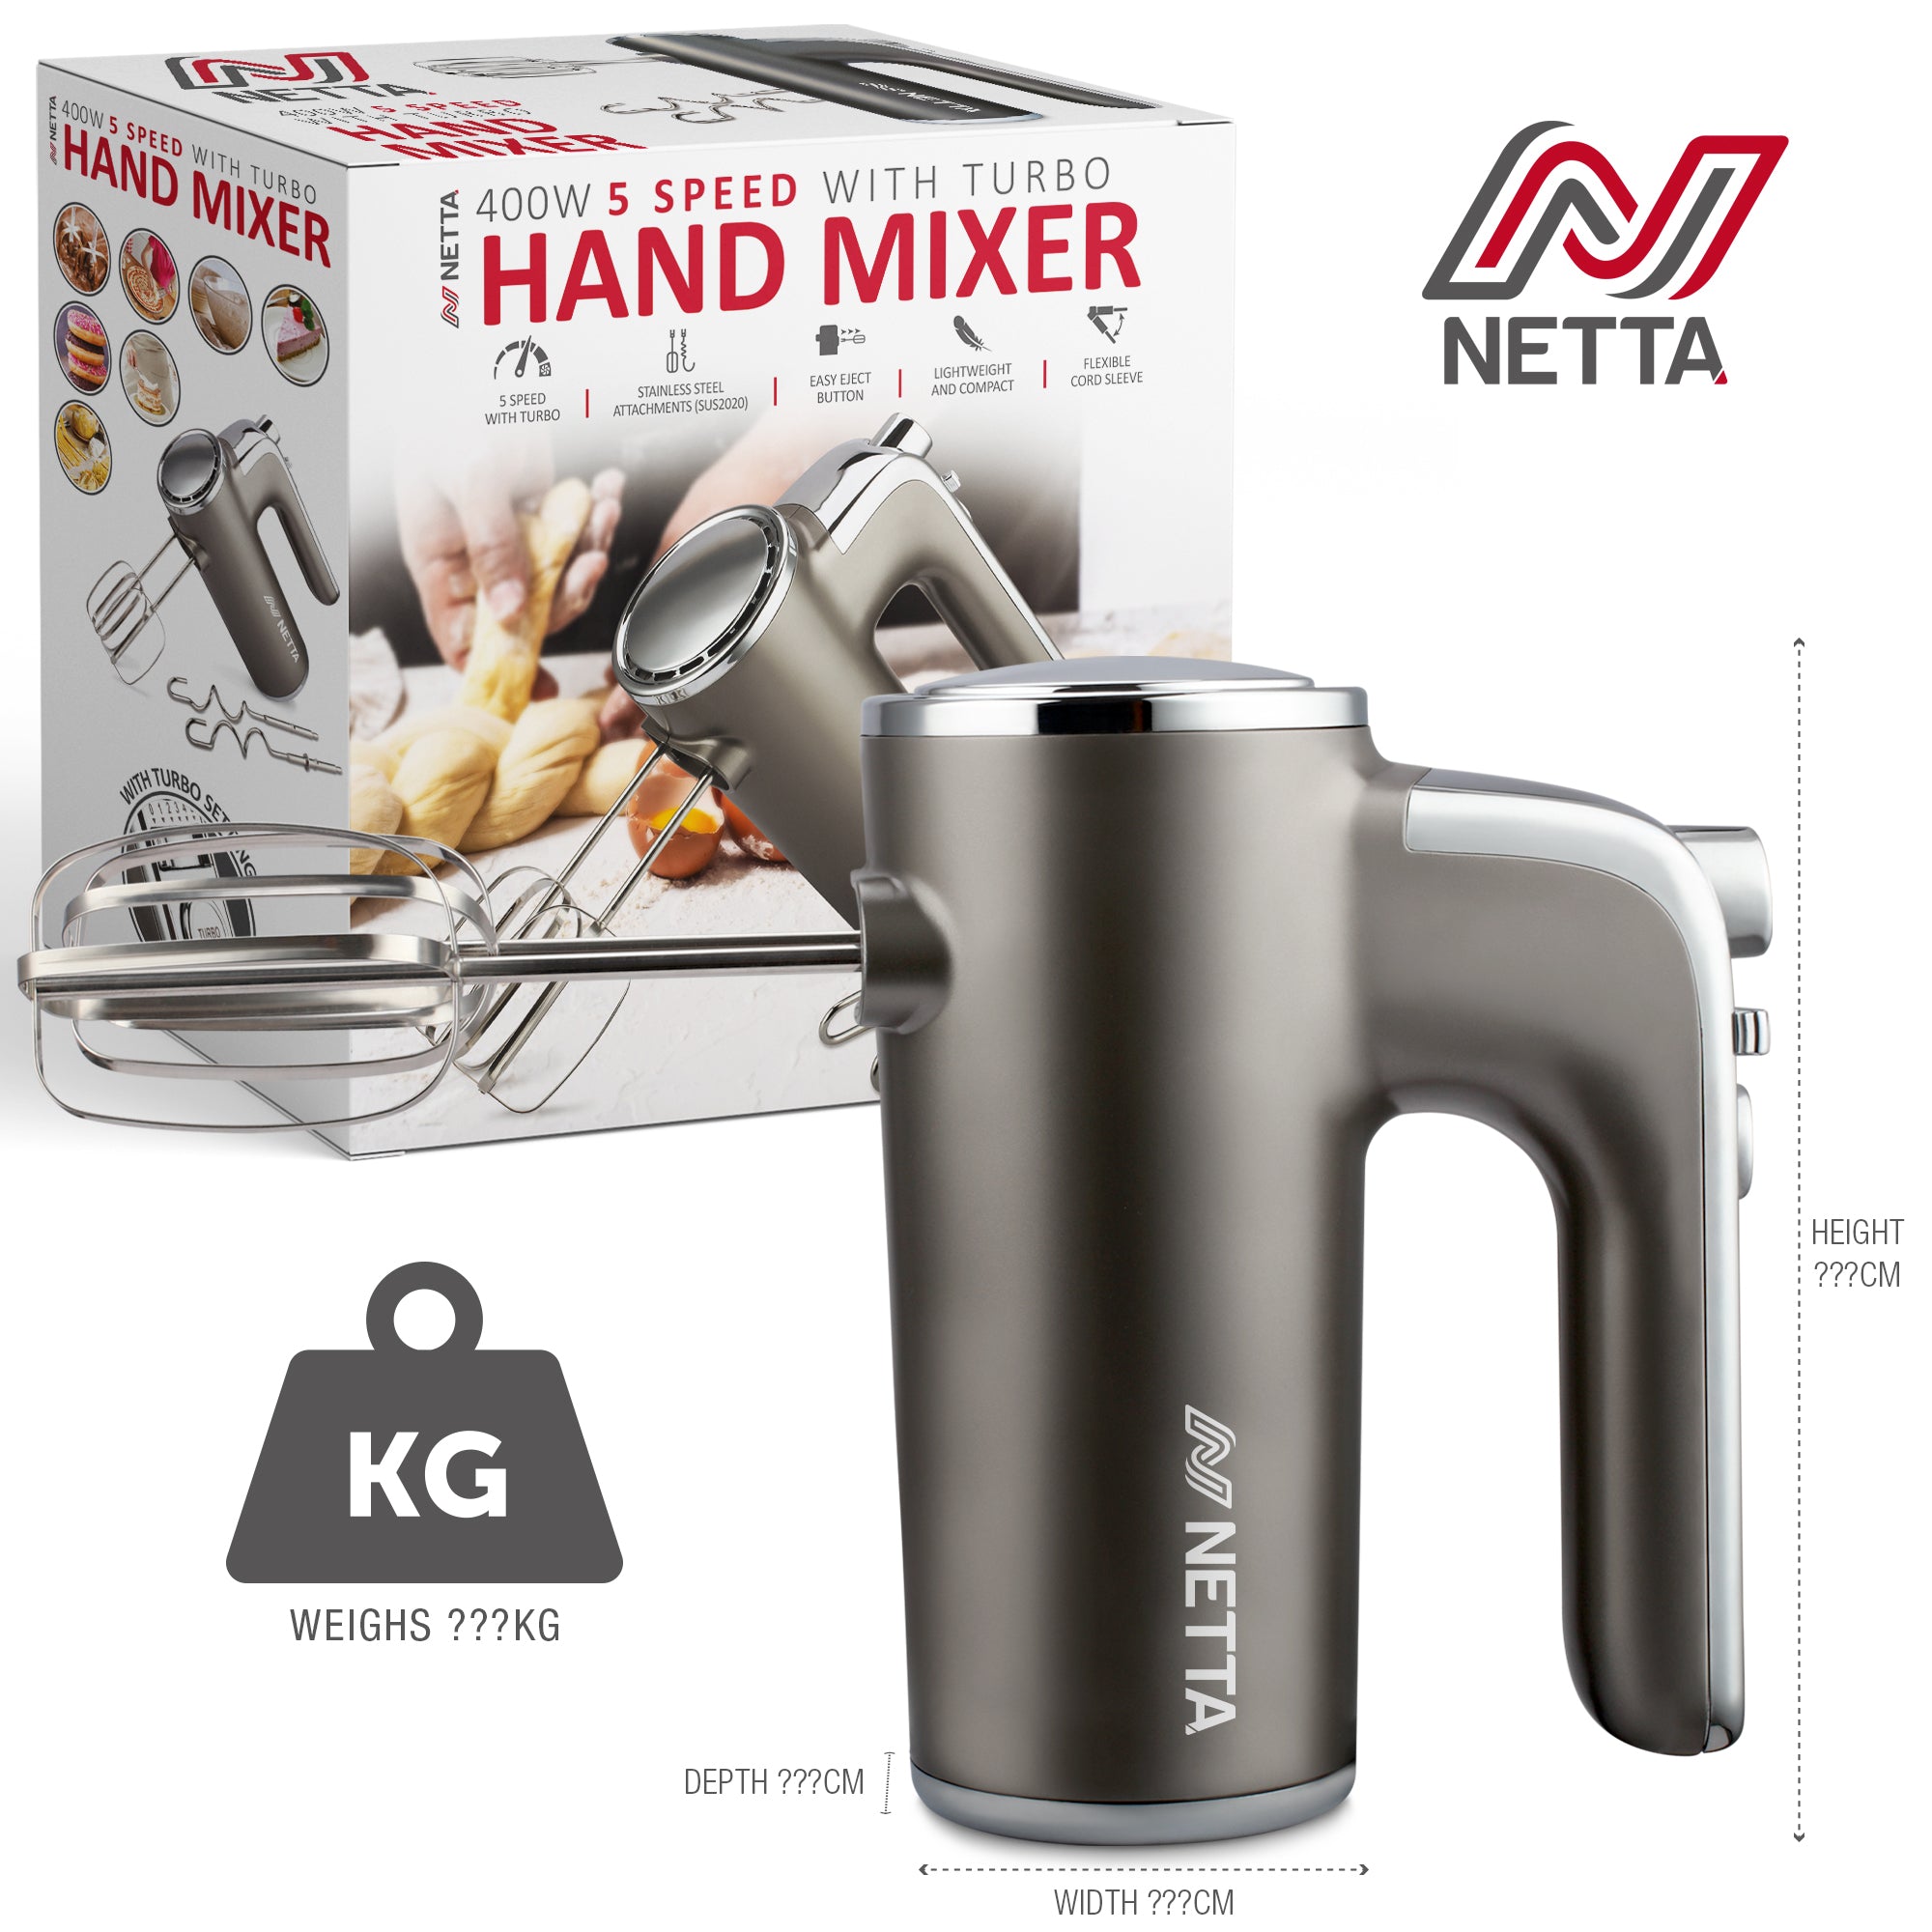 NETTA 400W Hand Mixer - Stainless Steel